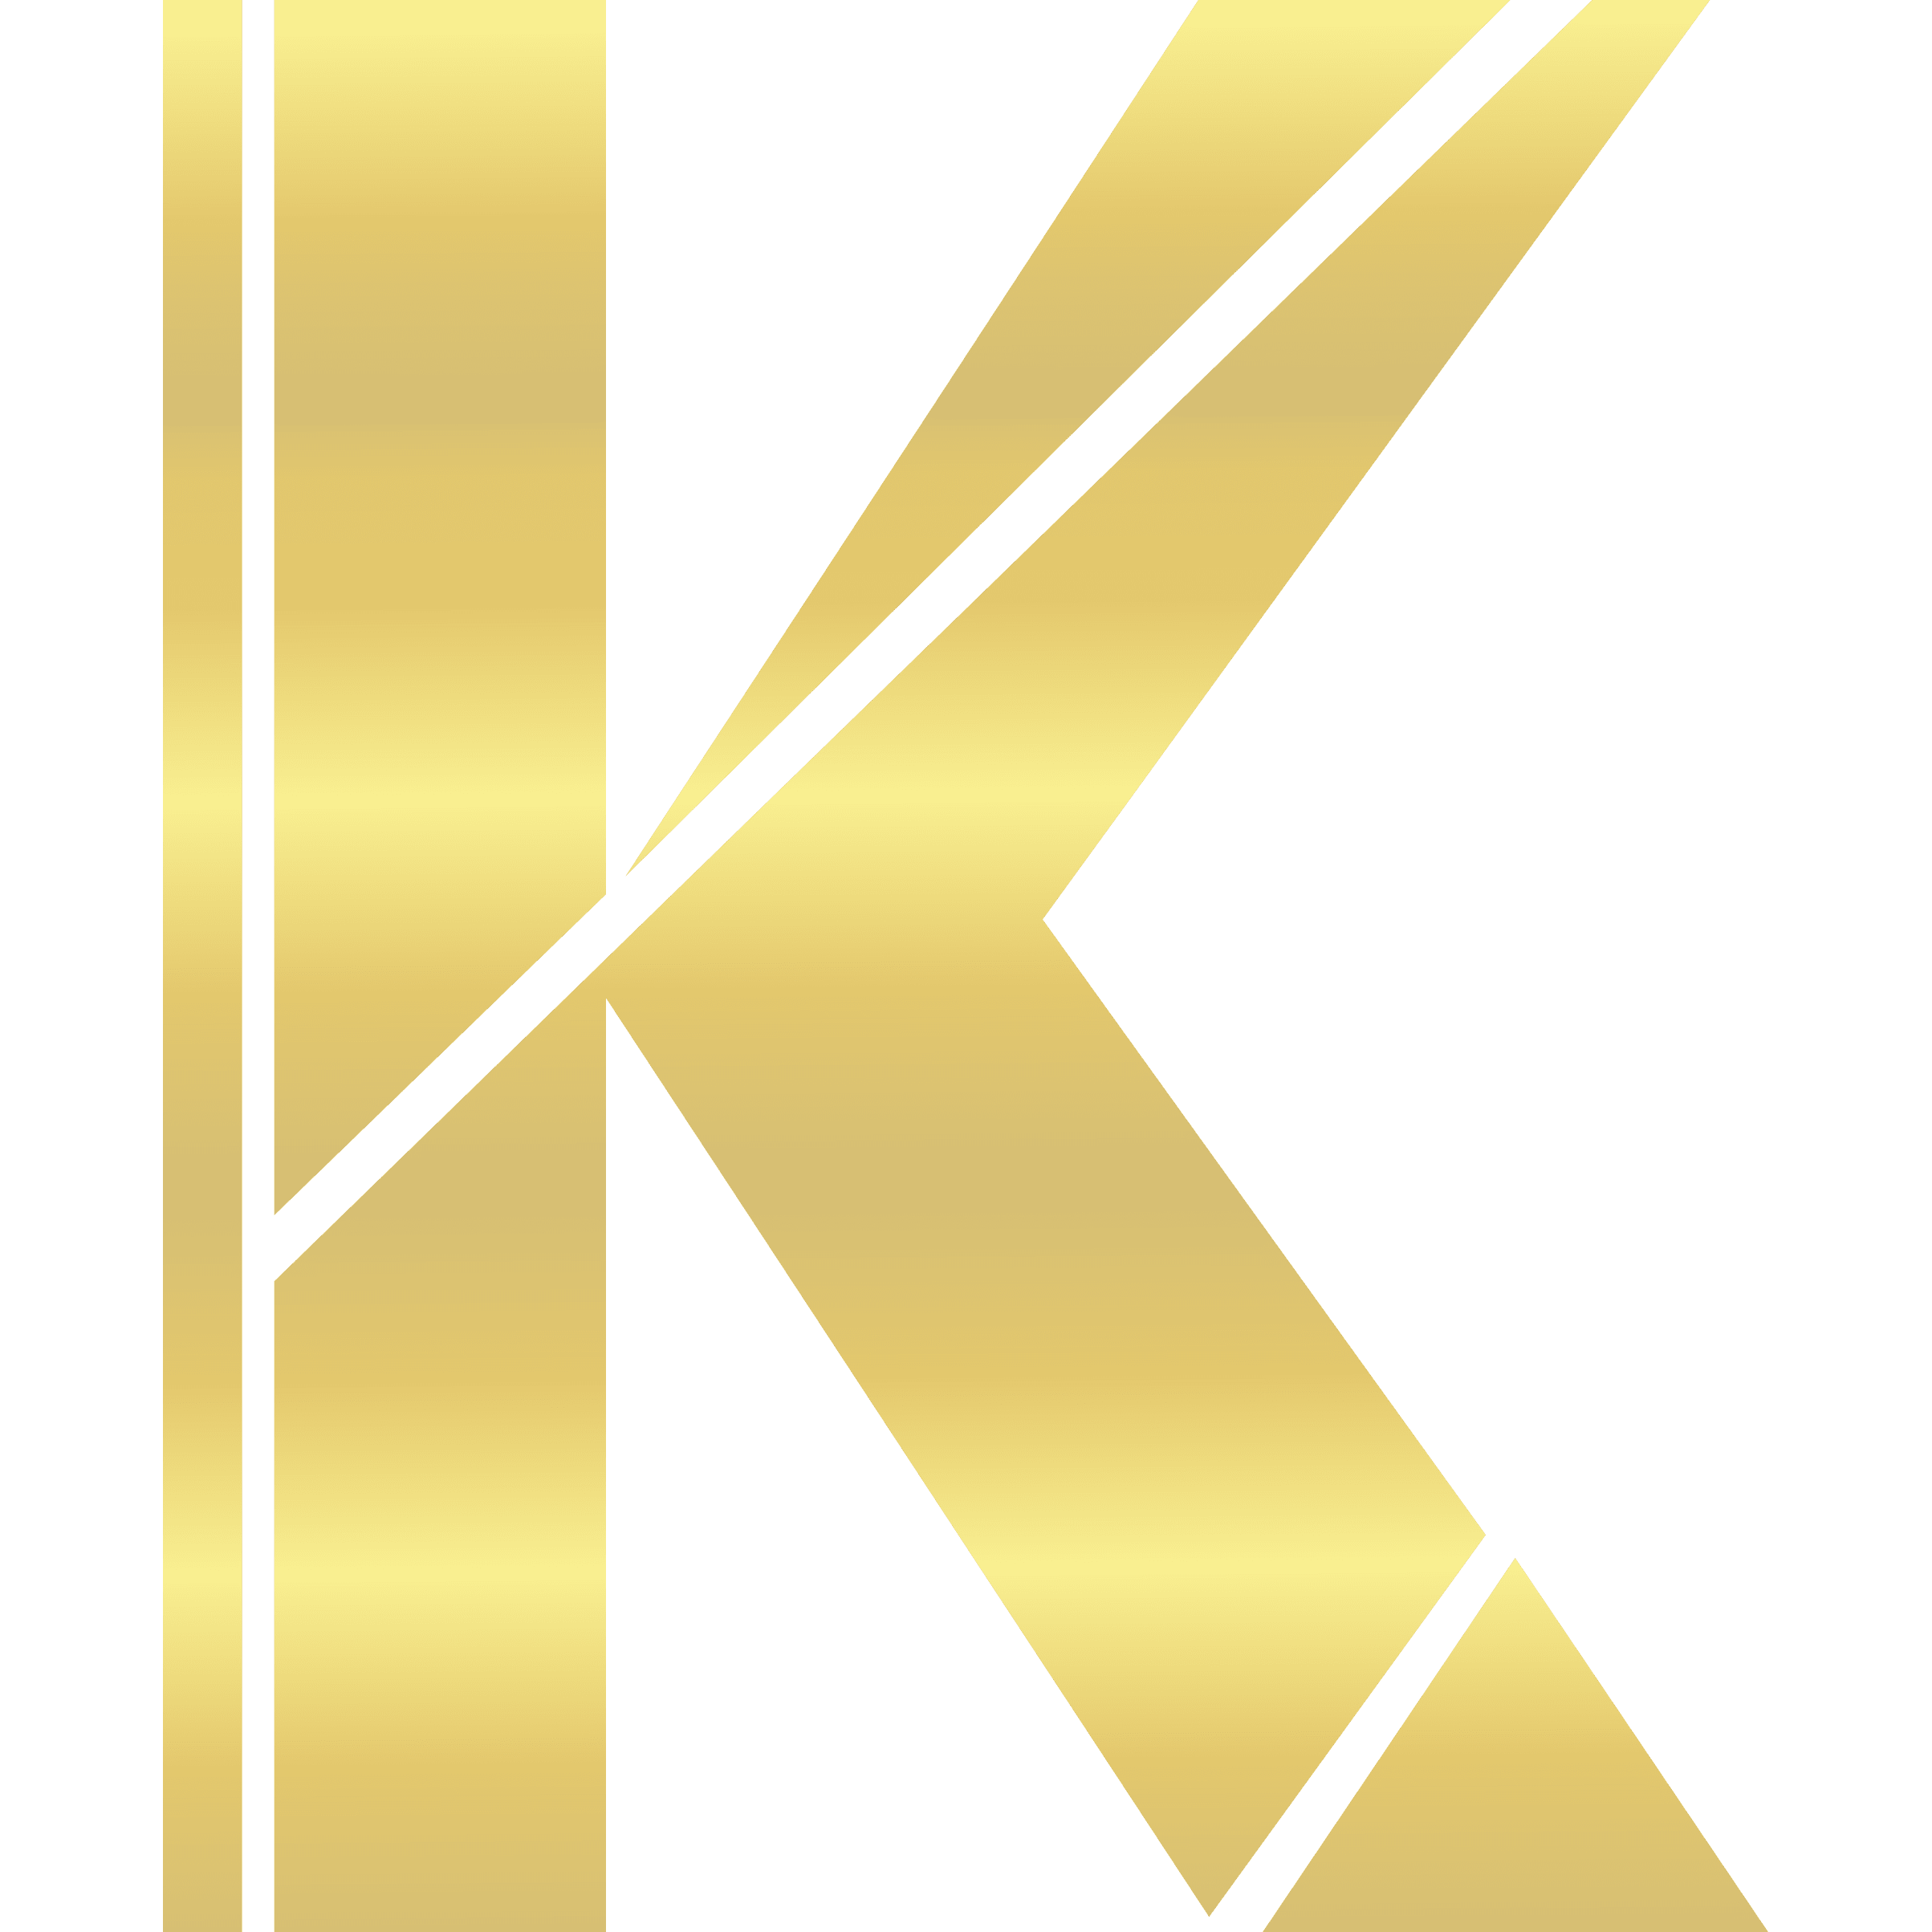 Karatgold Coin logo in png format